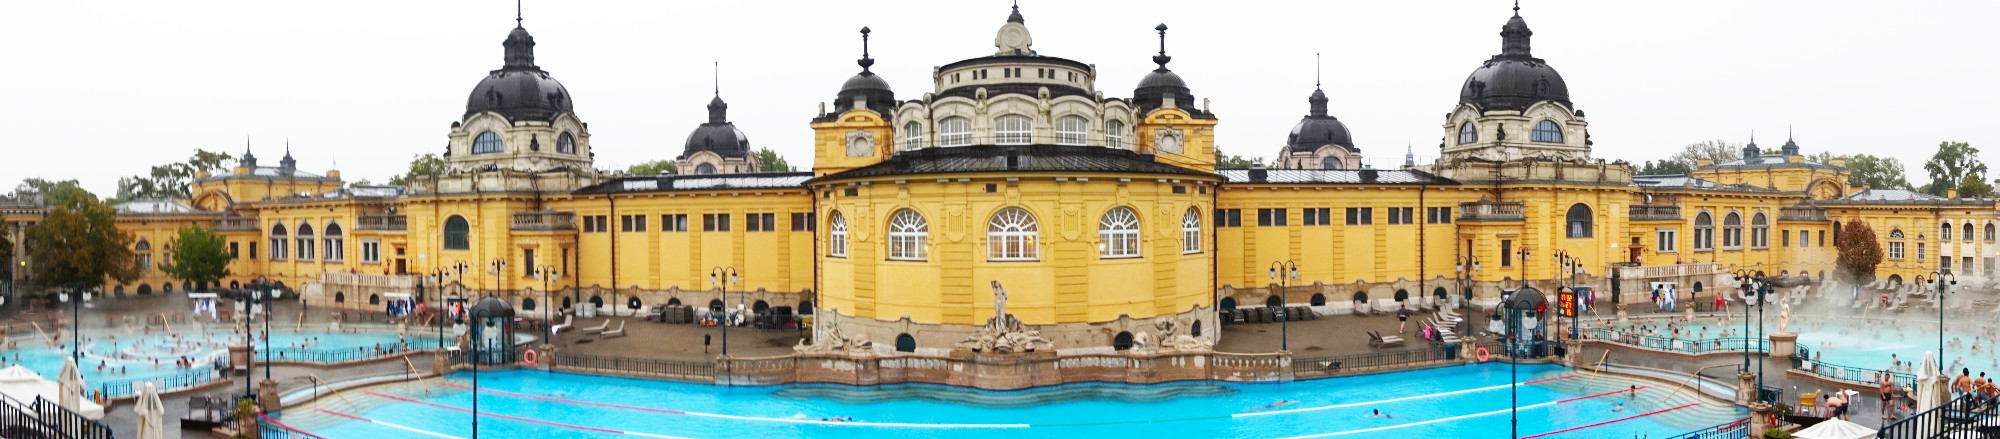 Szechenyi spa baths, Budapest